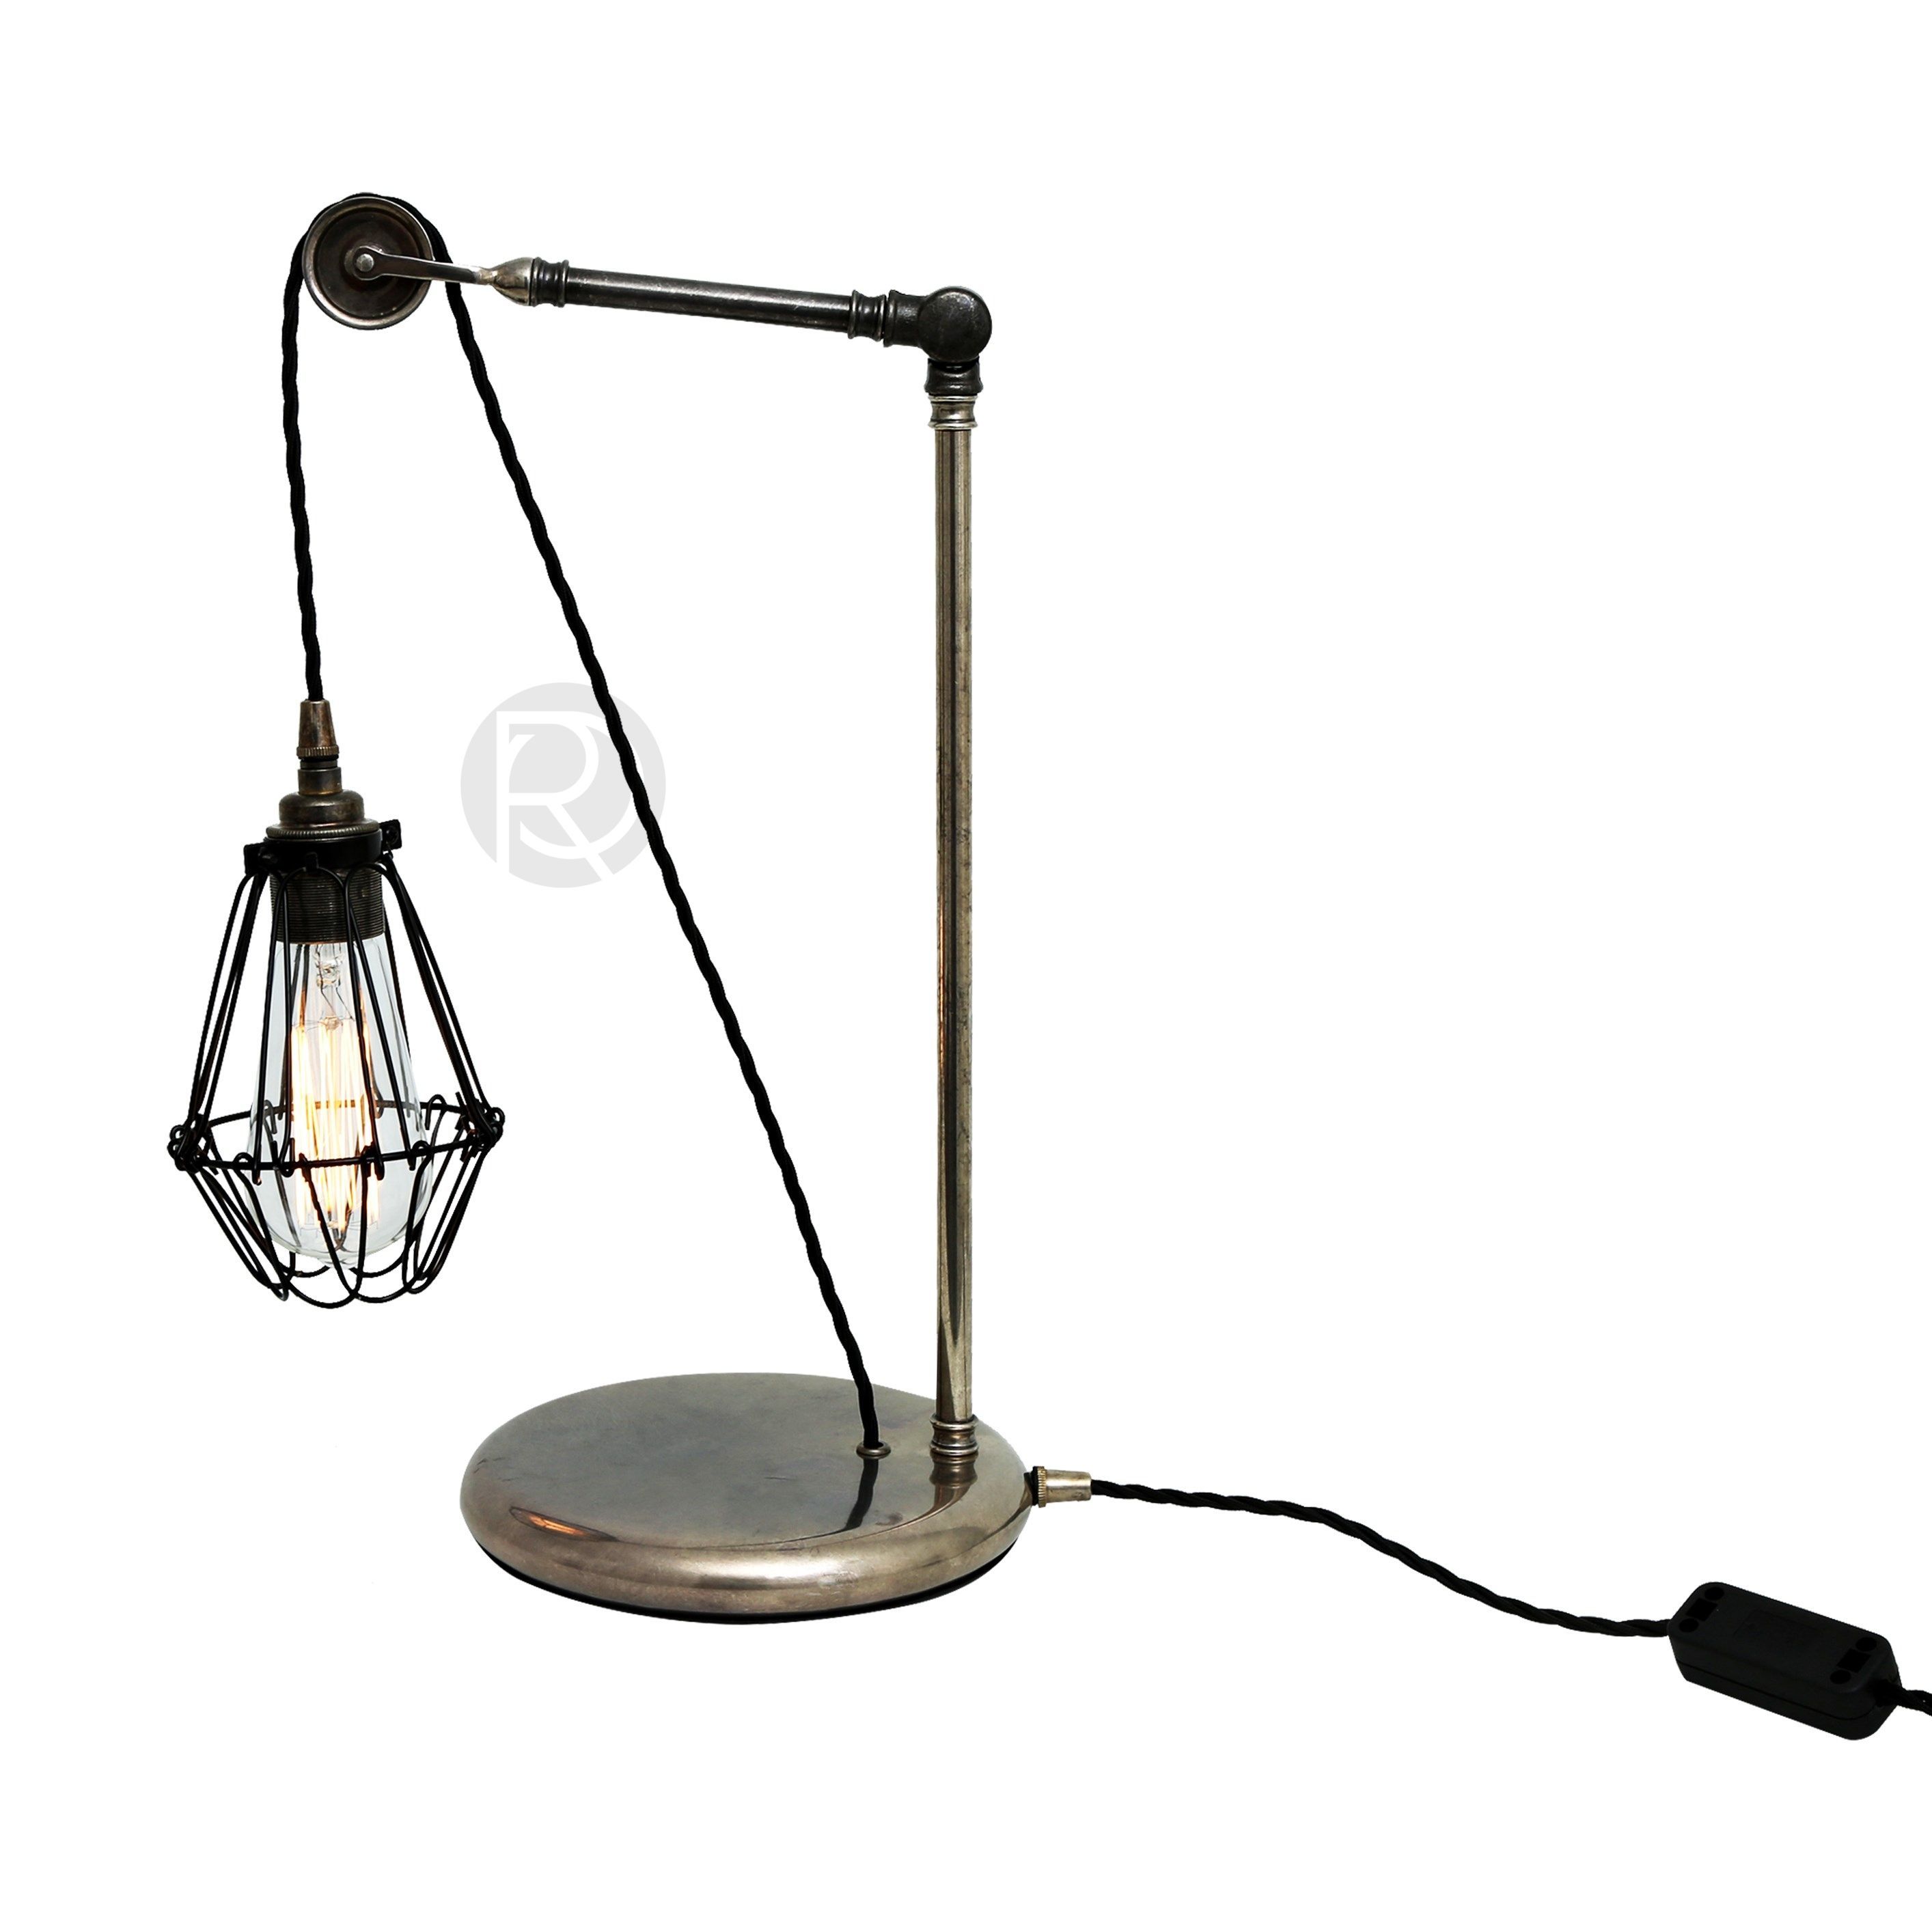 Table lamp APOCH by Mullan Lighting